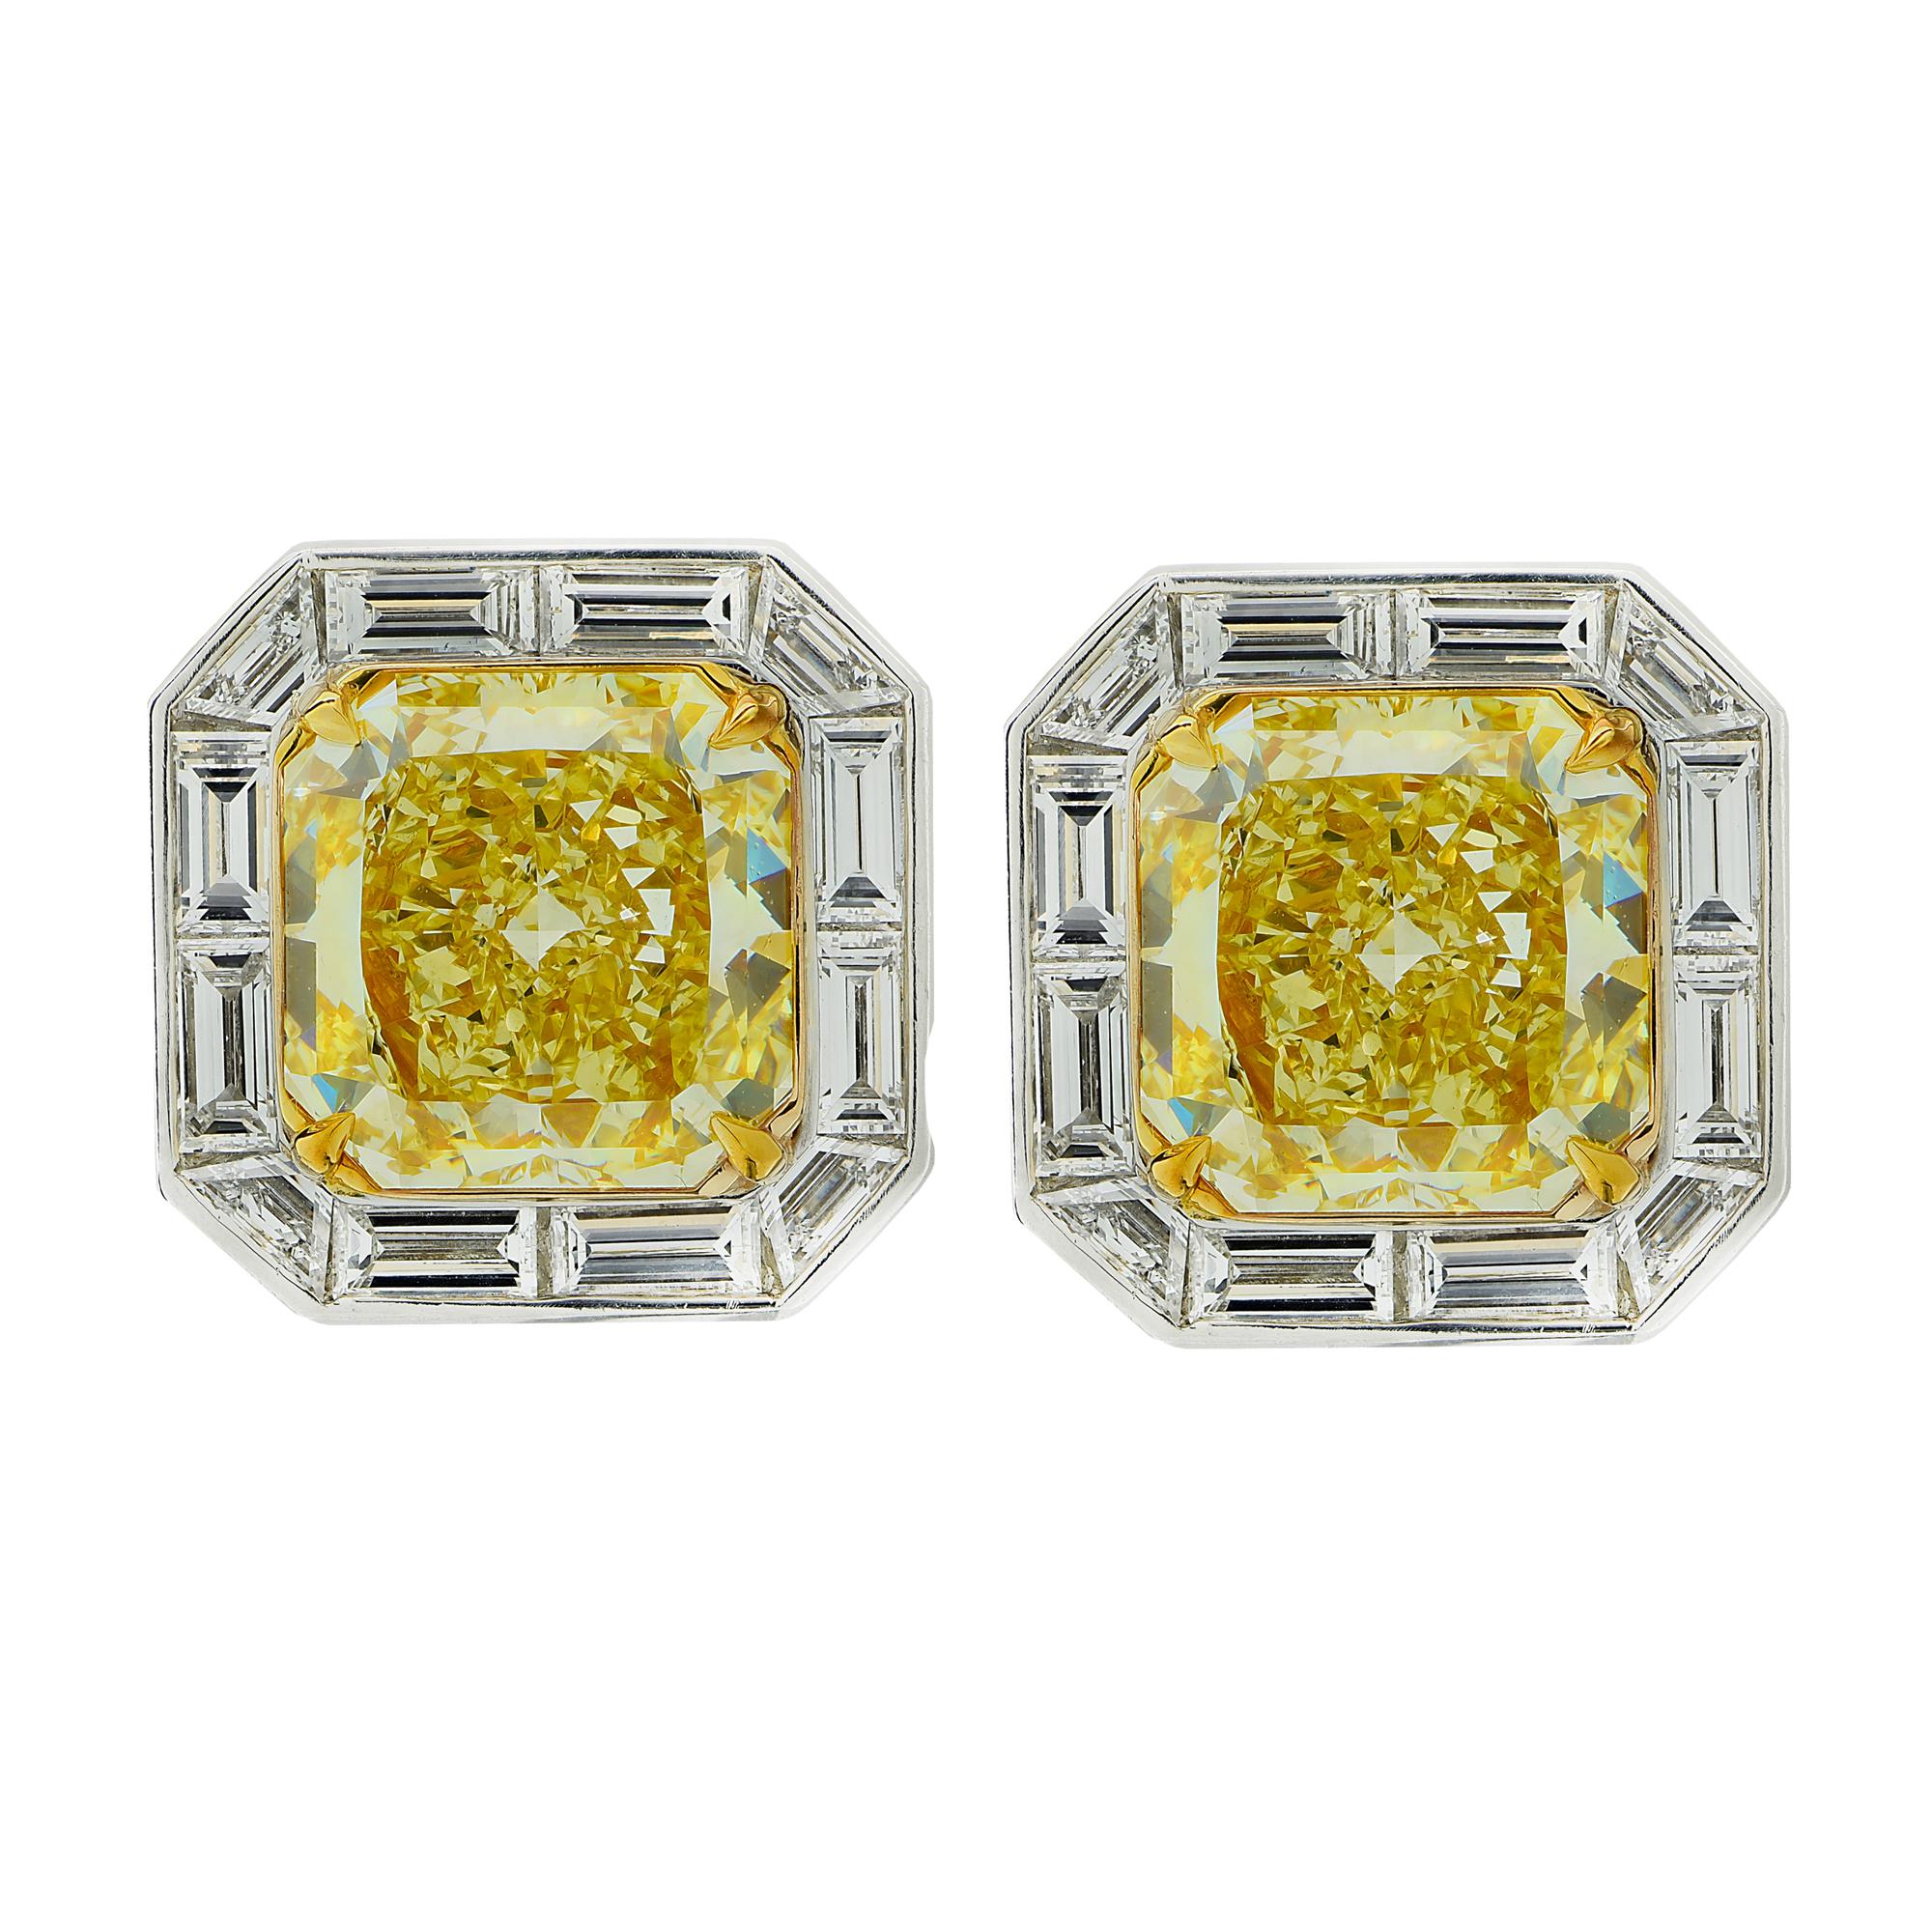 Vivid Diamonds GIA Certified 10.61 Carat Fancy Intense Yellow Diamond Earrings In New Condition For Sale In Miami, FL